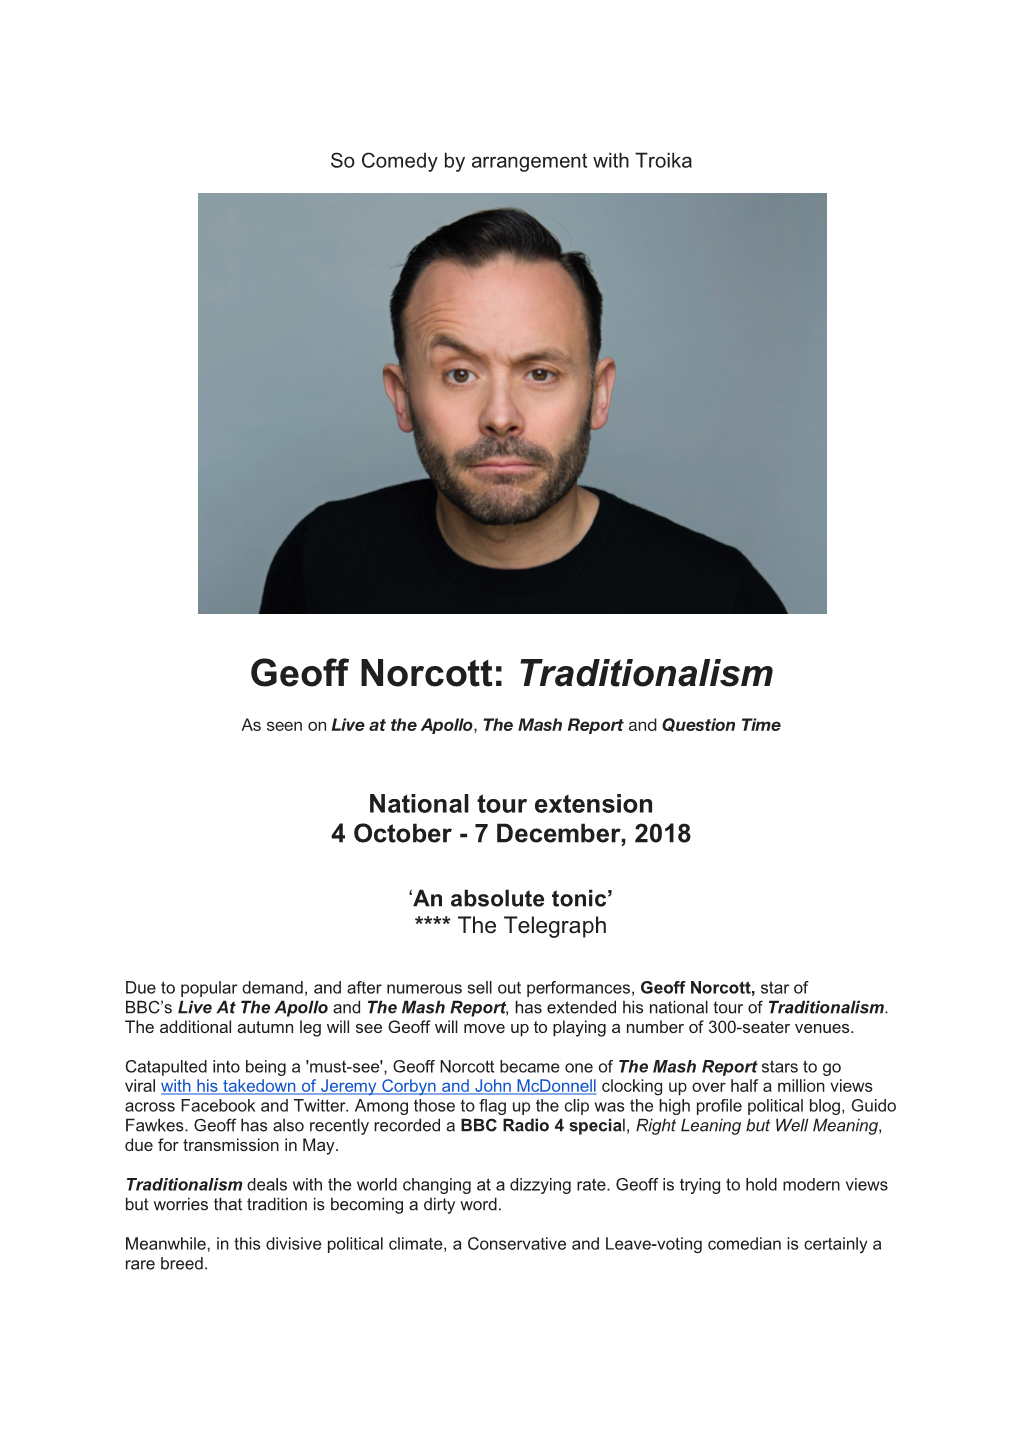 Geoff Norcott: Traditionalism